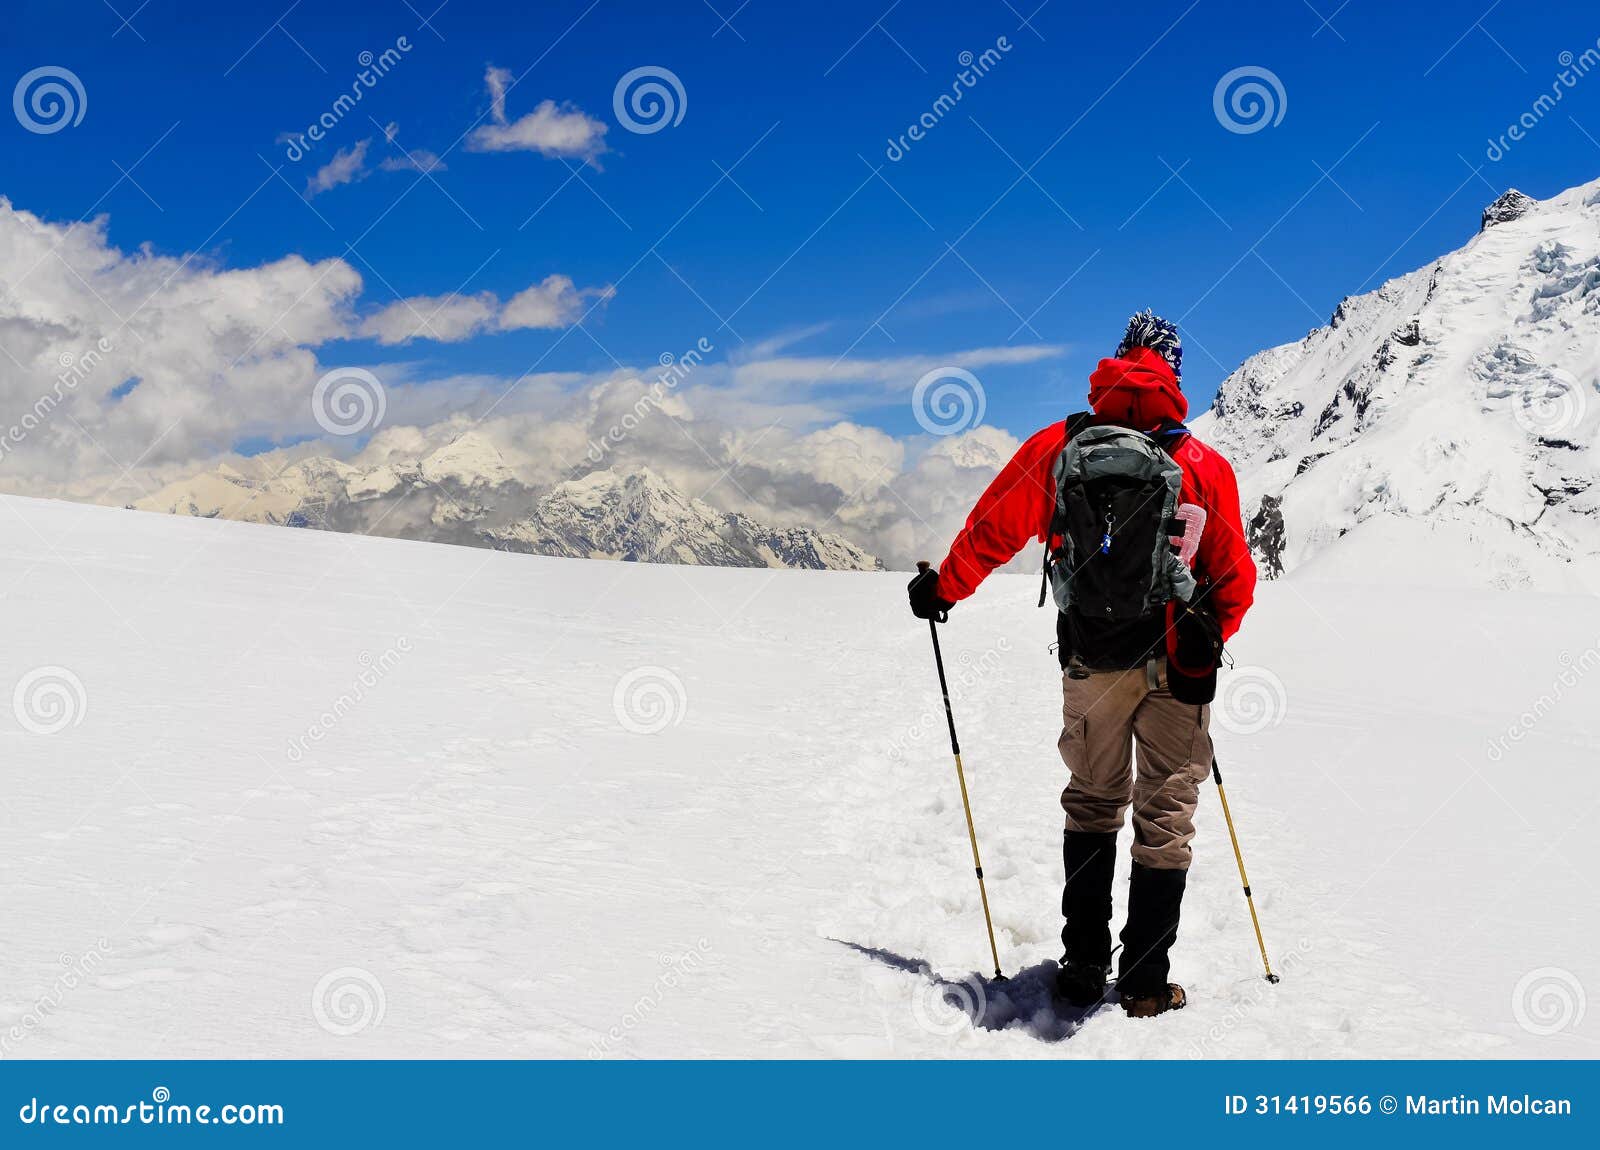 mountain trekker looking at high winter himalayas mountains